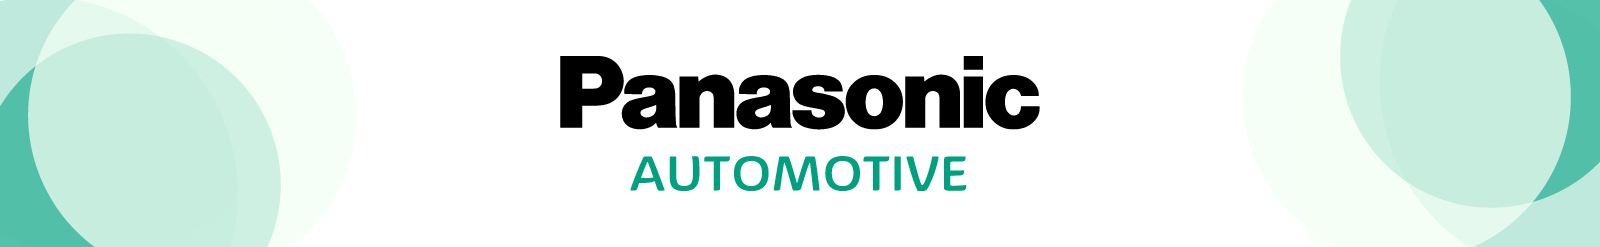 image:Panasonic AUTOMOTIVE logo